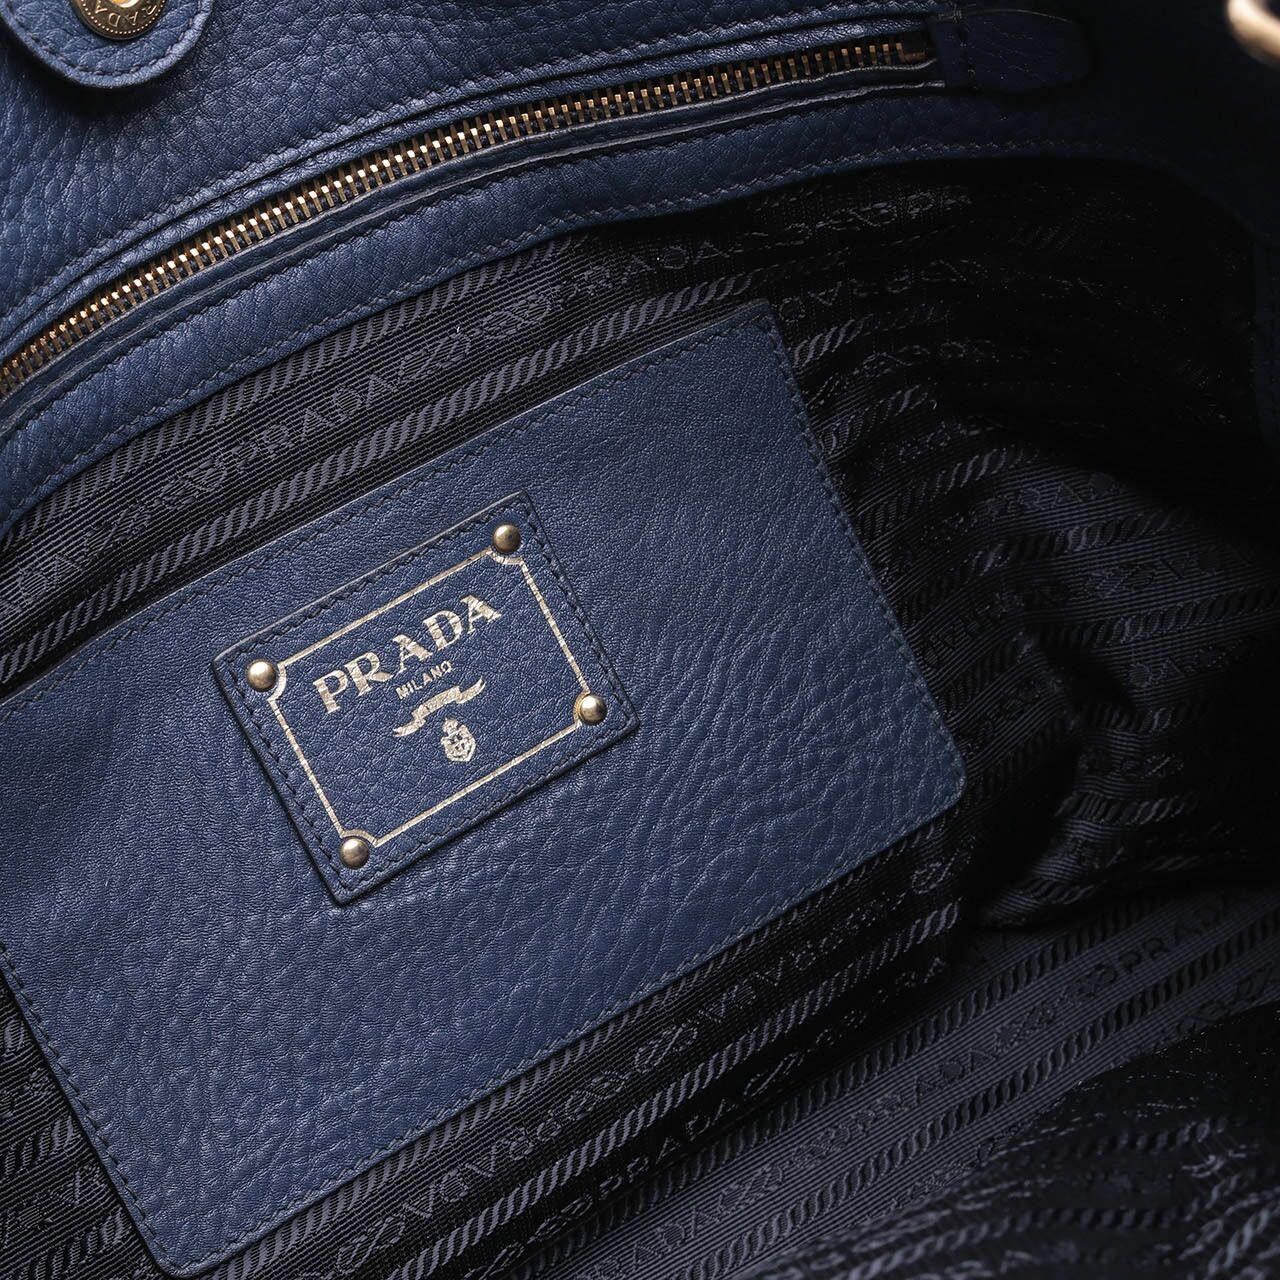 Prada Vitello Daino Navy Leather Satchel Bag